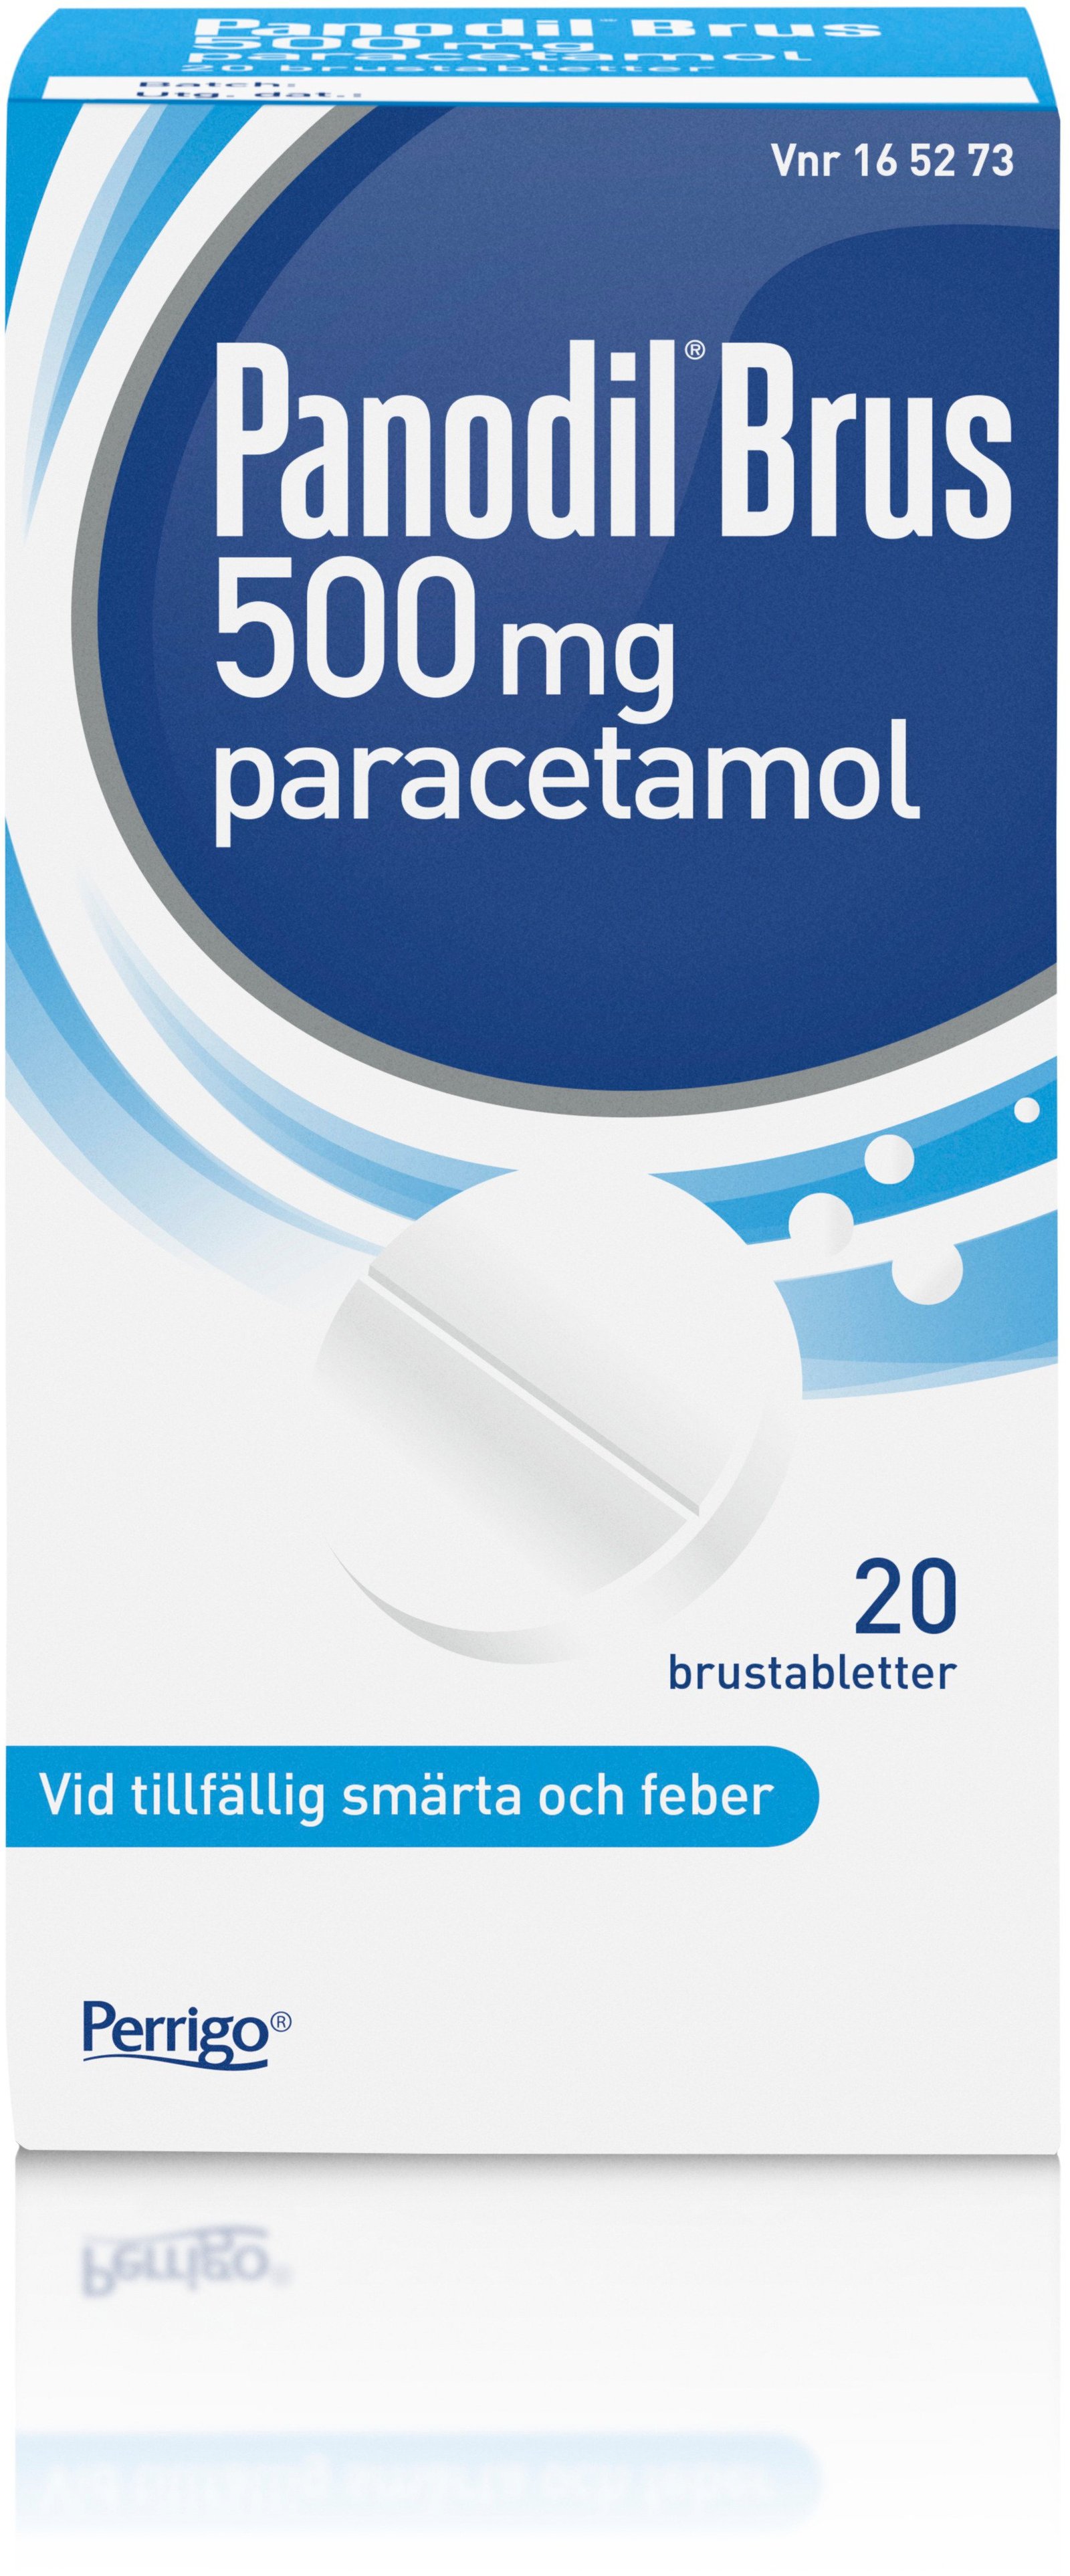 Panodil Brus 500mg paracetamol 20 brustabletter